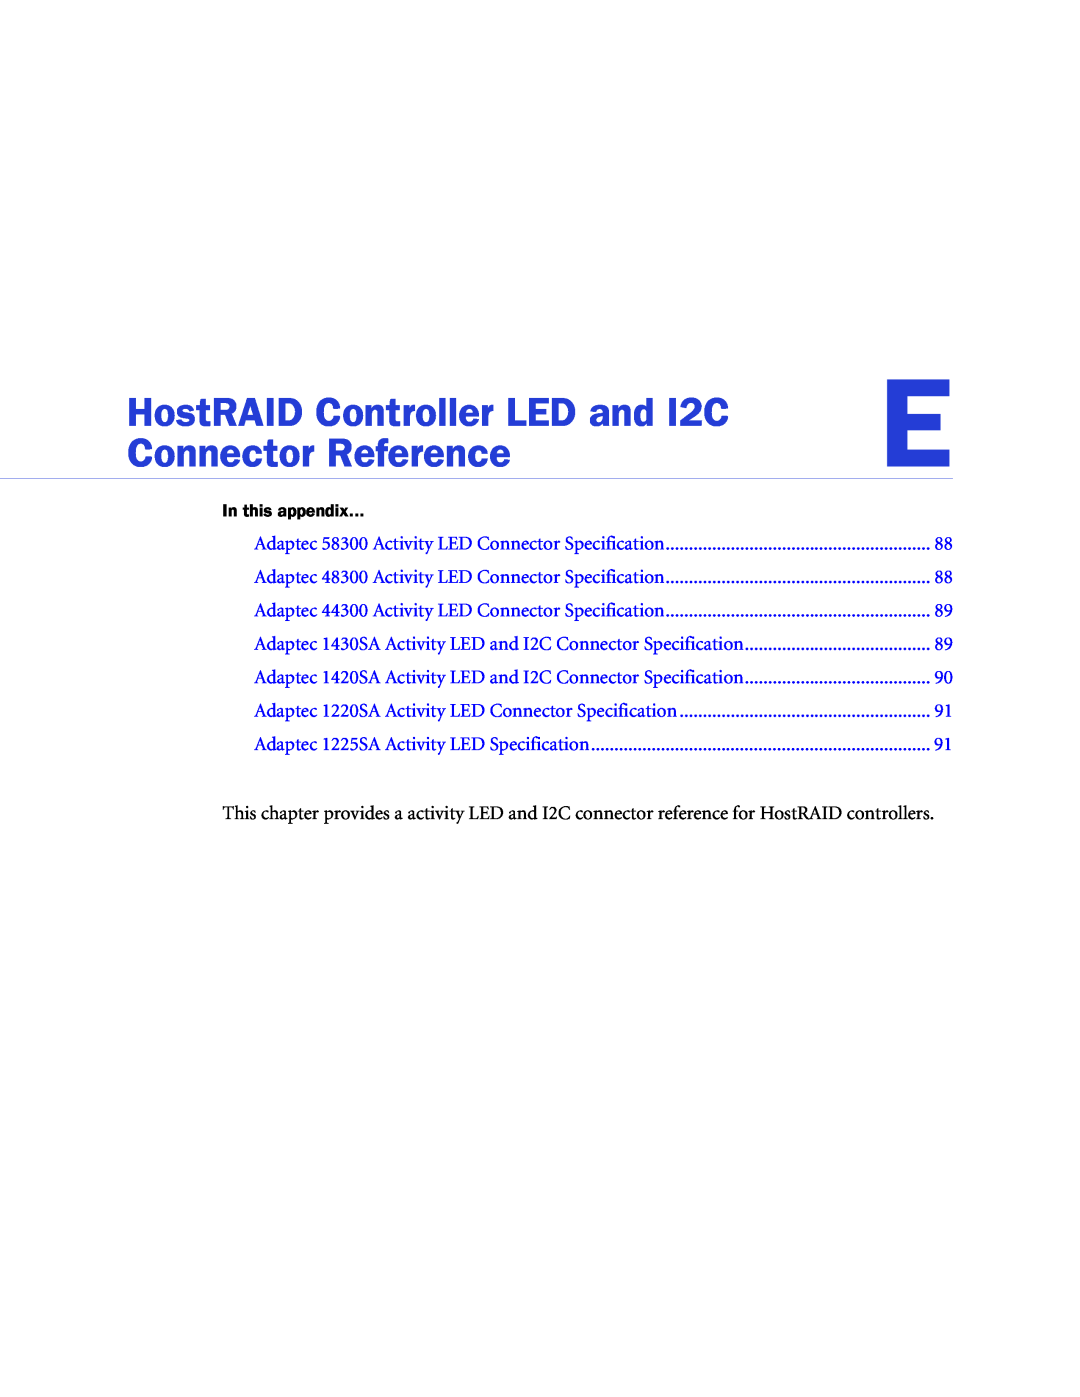 Adaptec 48300, 58300, 44300, 1220SA, 1420SA, 1225SA HostRAID Controller LED and I2C, Connector Reference, In this appendix 